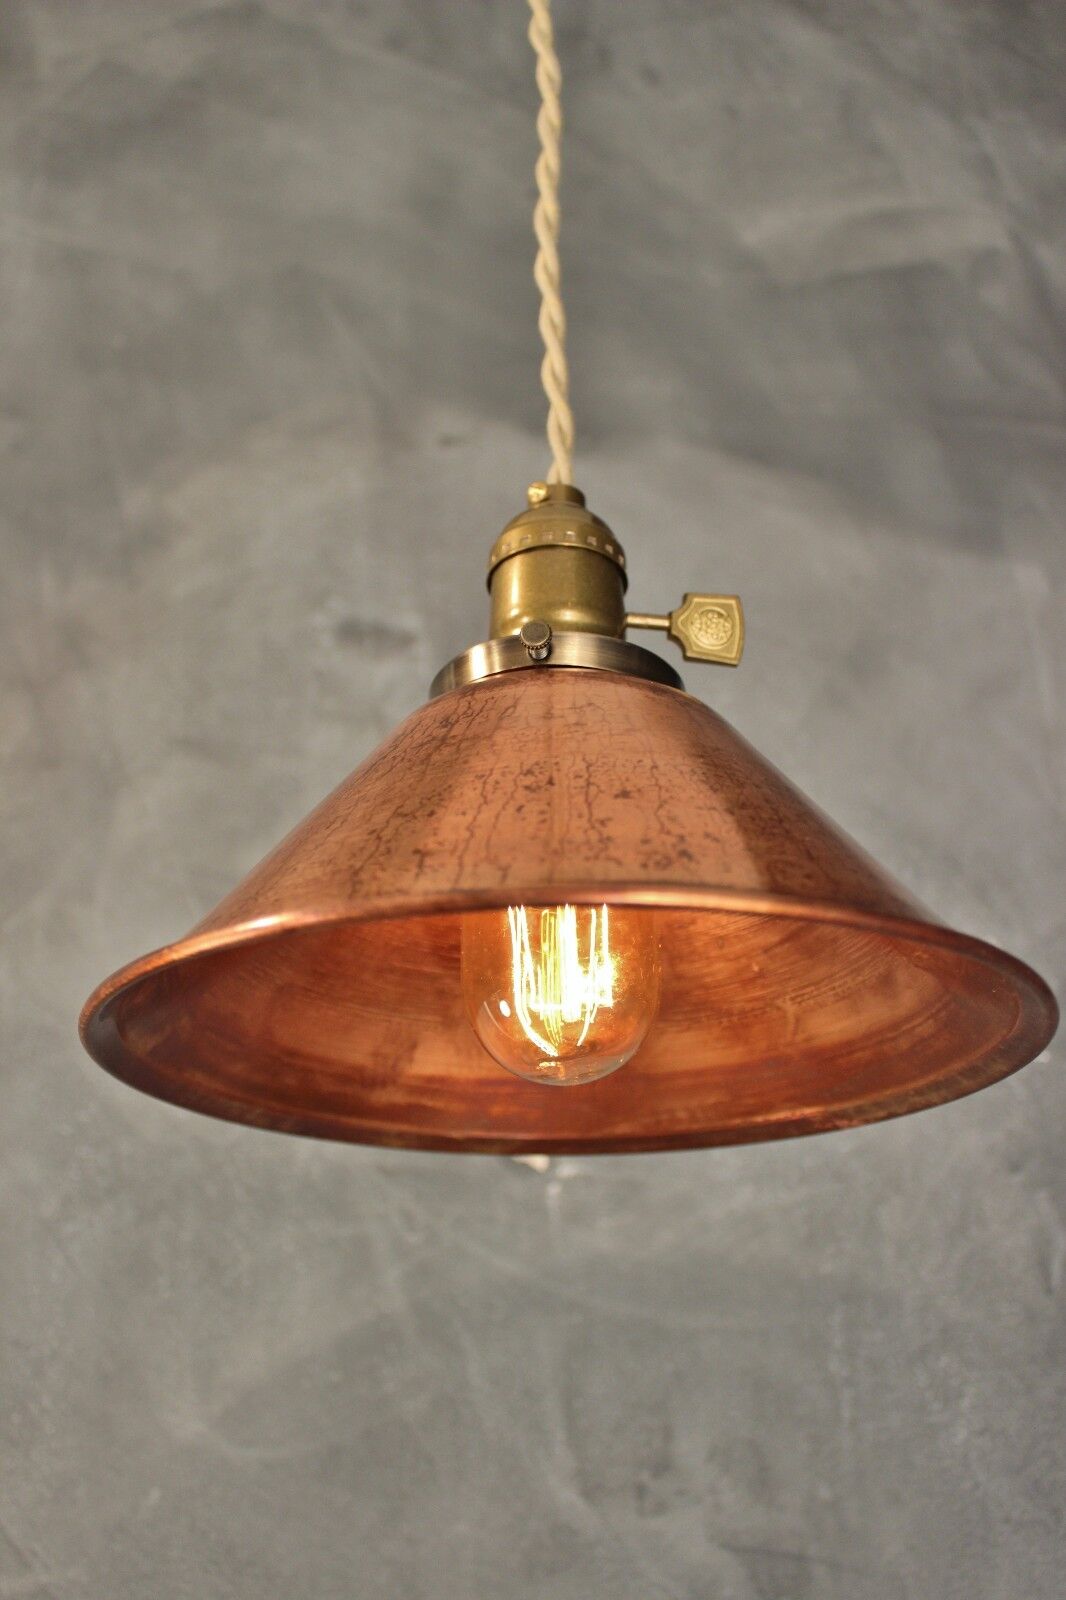 Weathered Copper Pendant Lamp - Vintage Industrial Hanging Light 